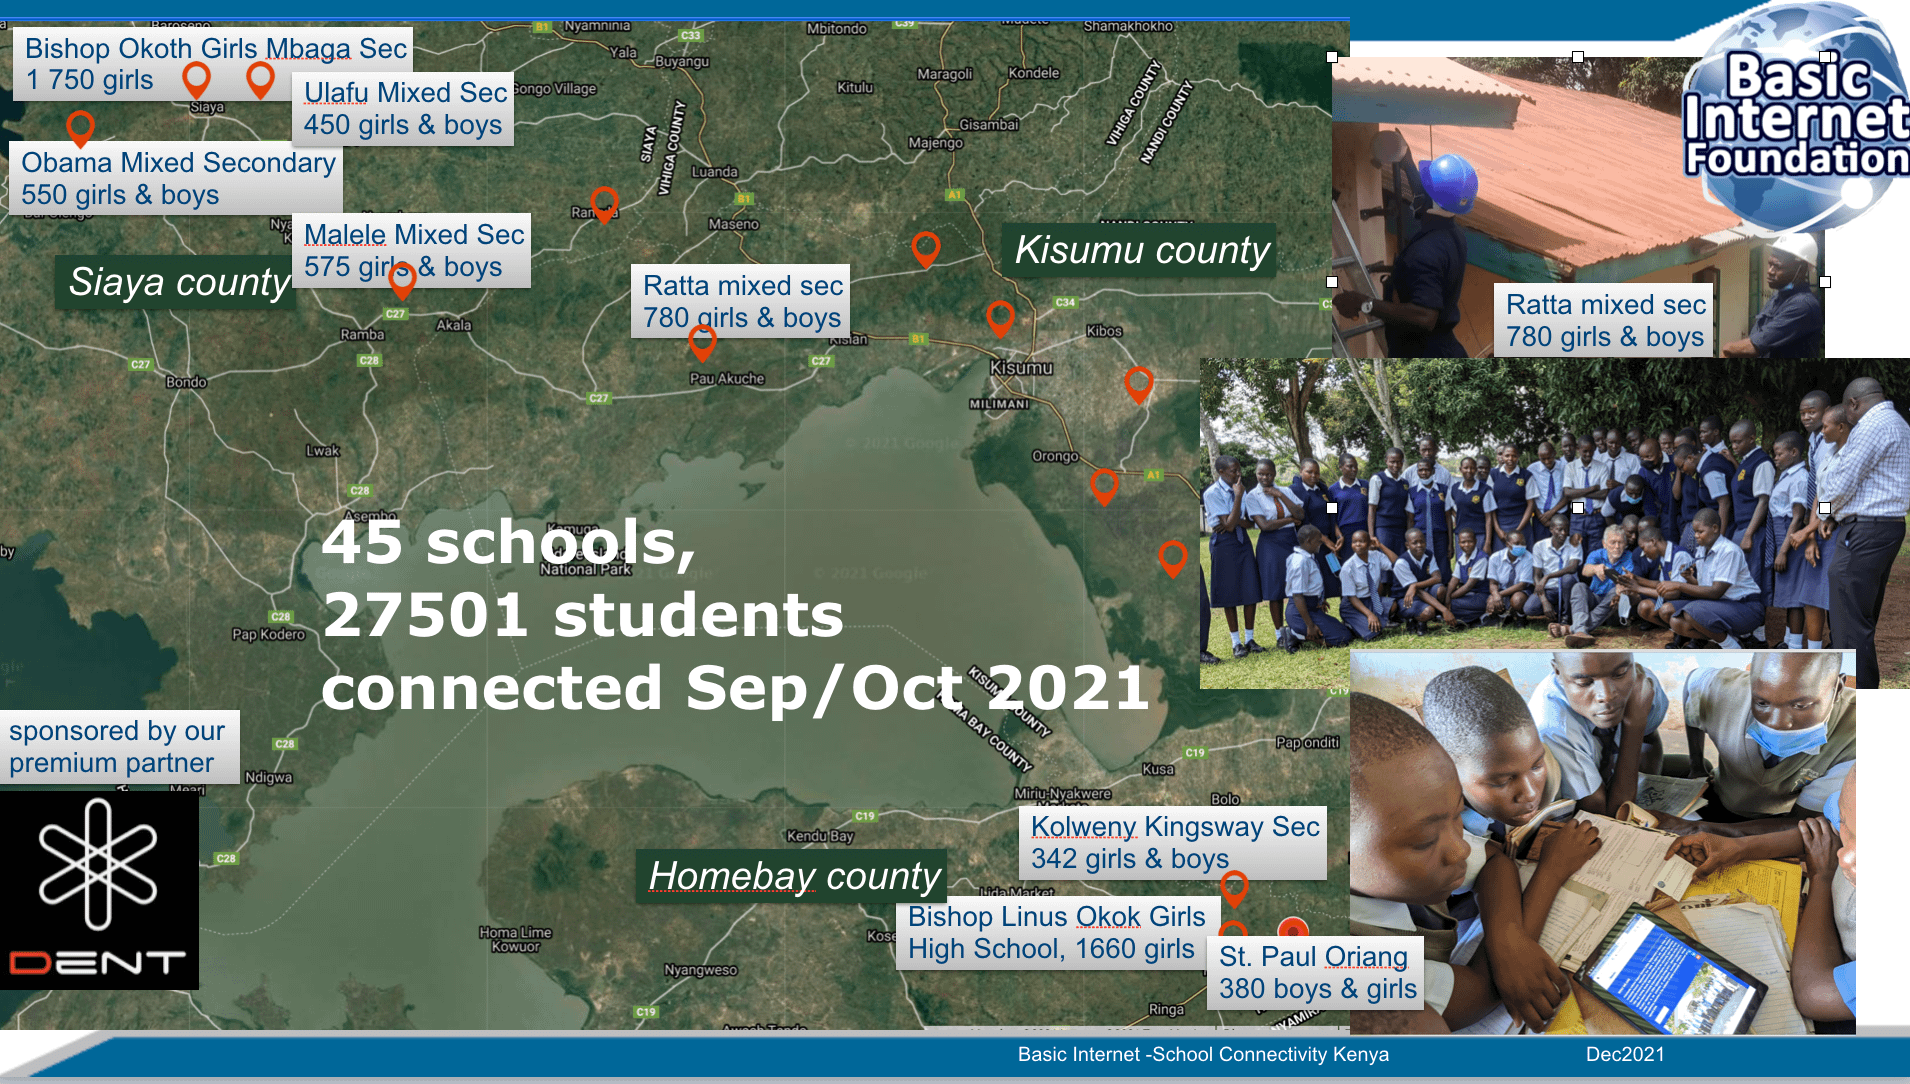 Keyna connecting 45 schools